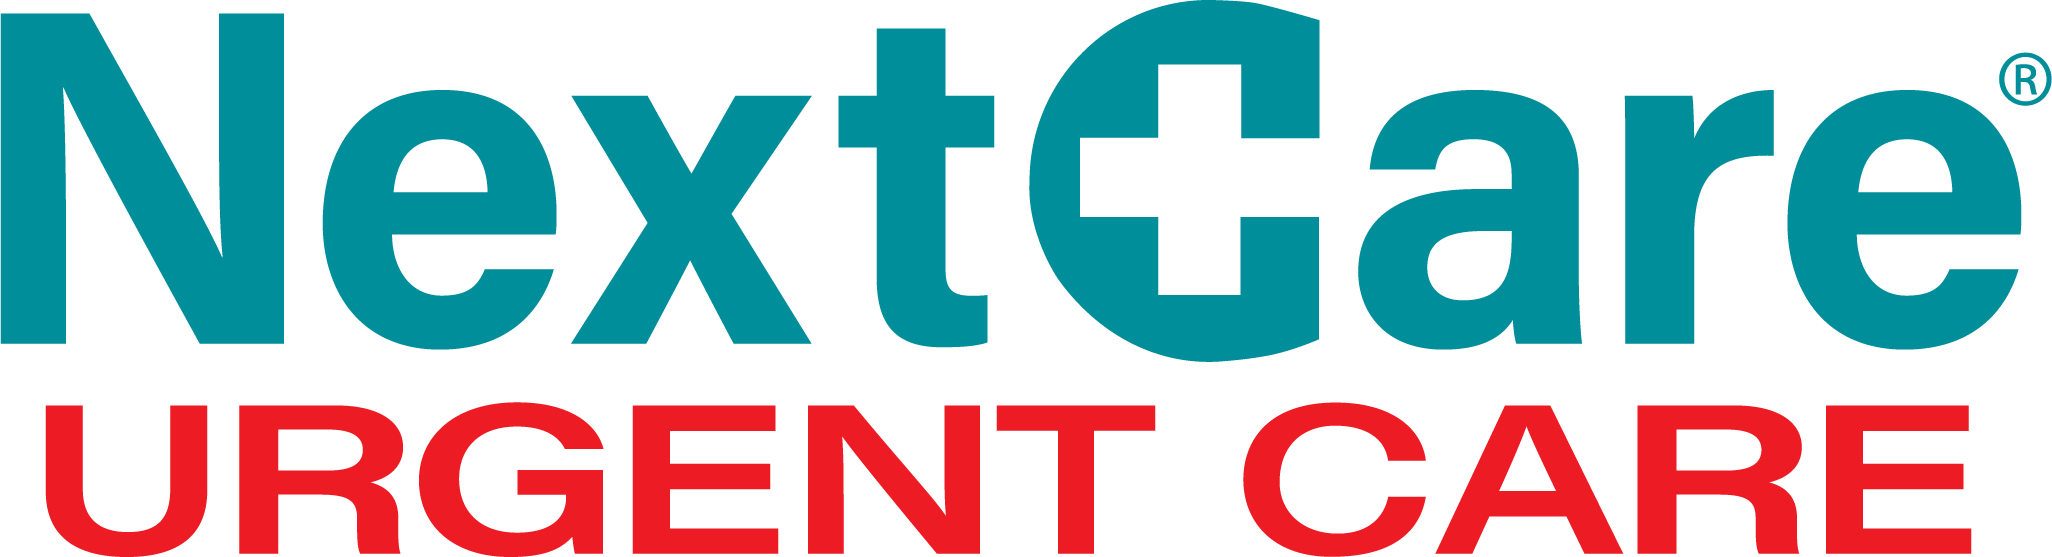 NextCare Urgent Care - Bluegrass Logo